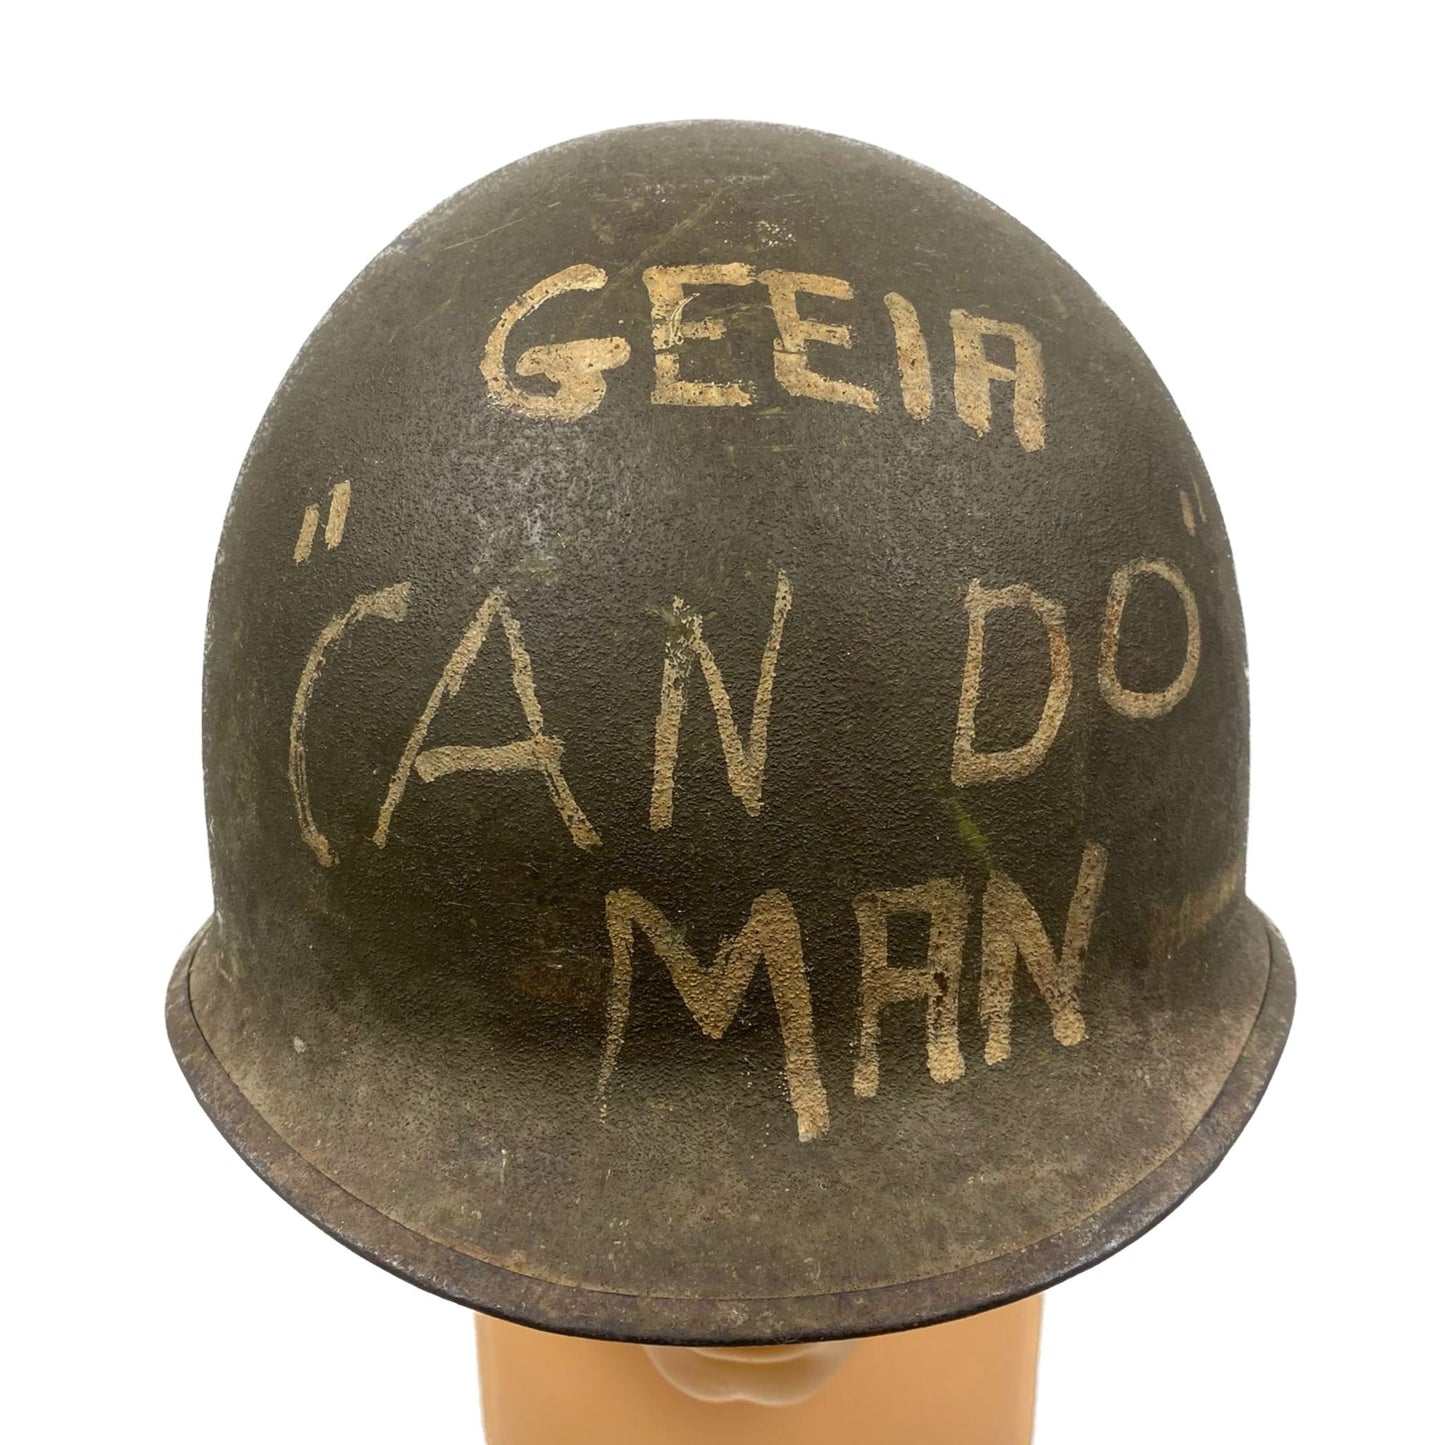 Vietnam M1 Helmet shell, McCord, rear seam, M143A - 1952/1953